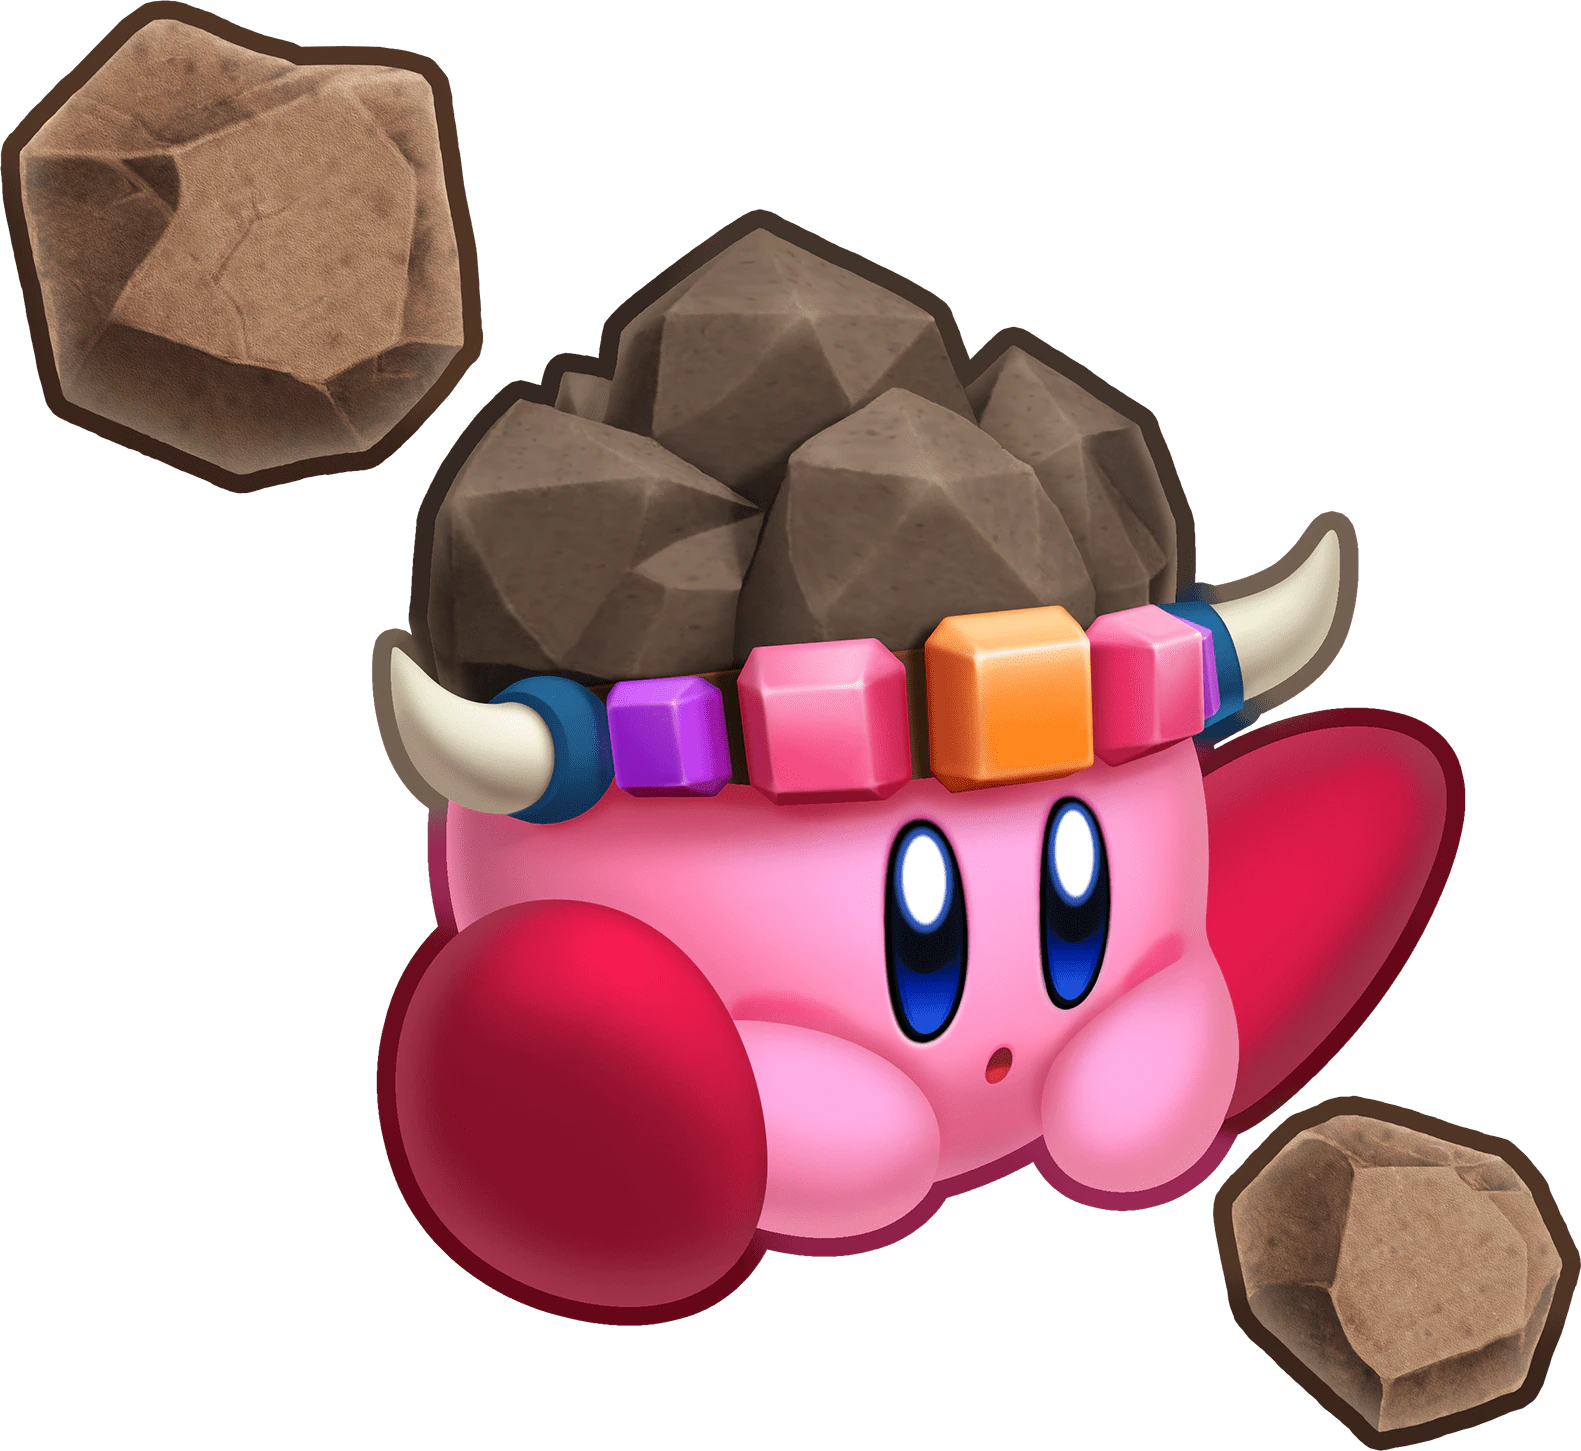 Meta Knight - WiKirby: it's a wiki, about Kirby!